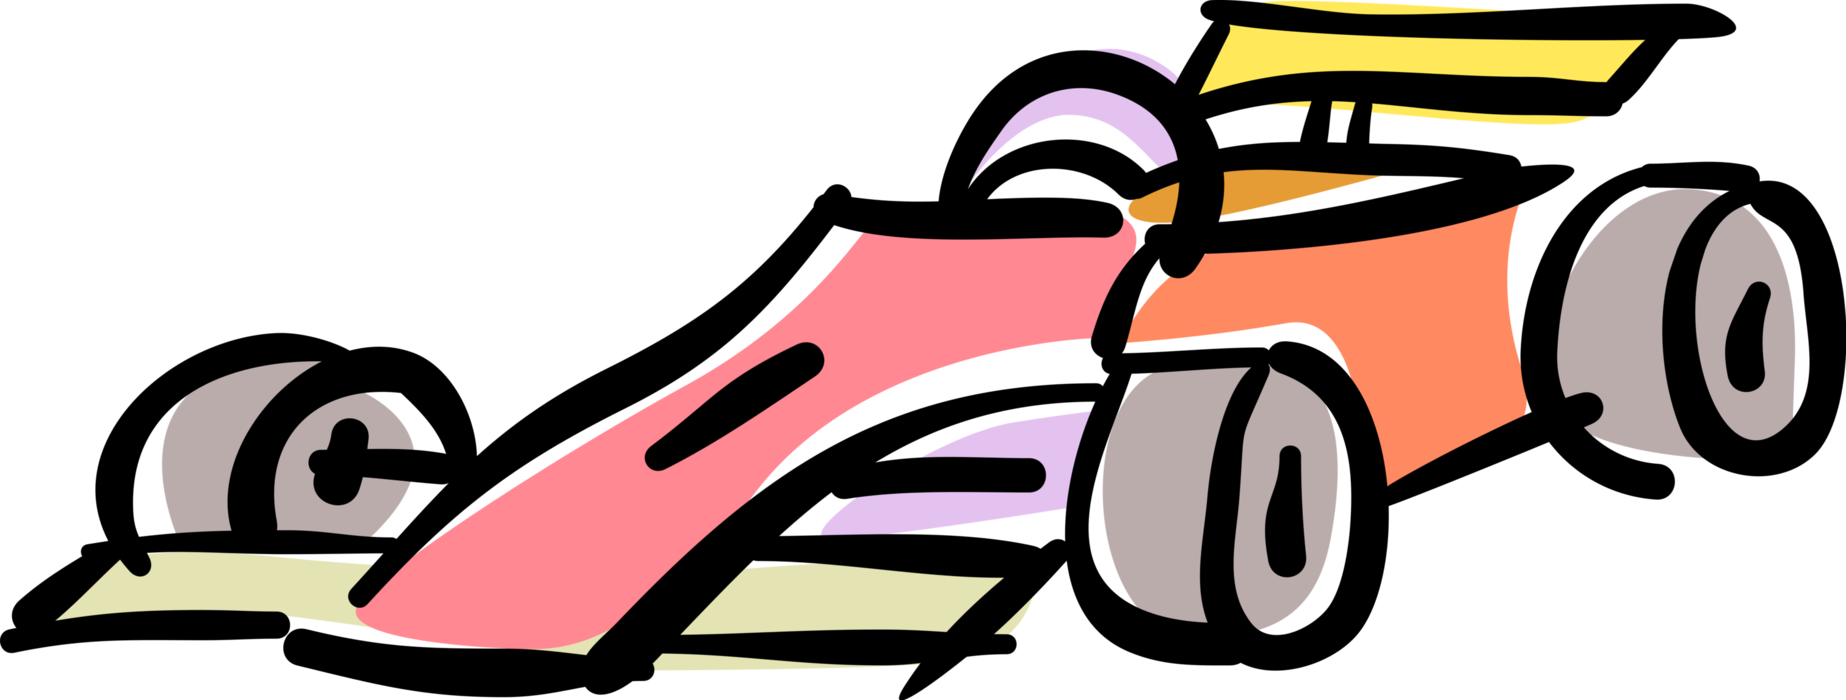 Vector Illustration of Formula One Motorsports Race Car Racing on Track